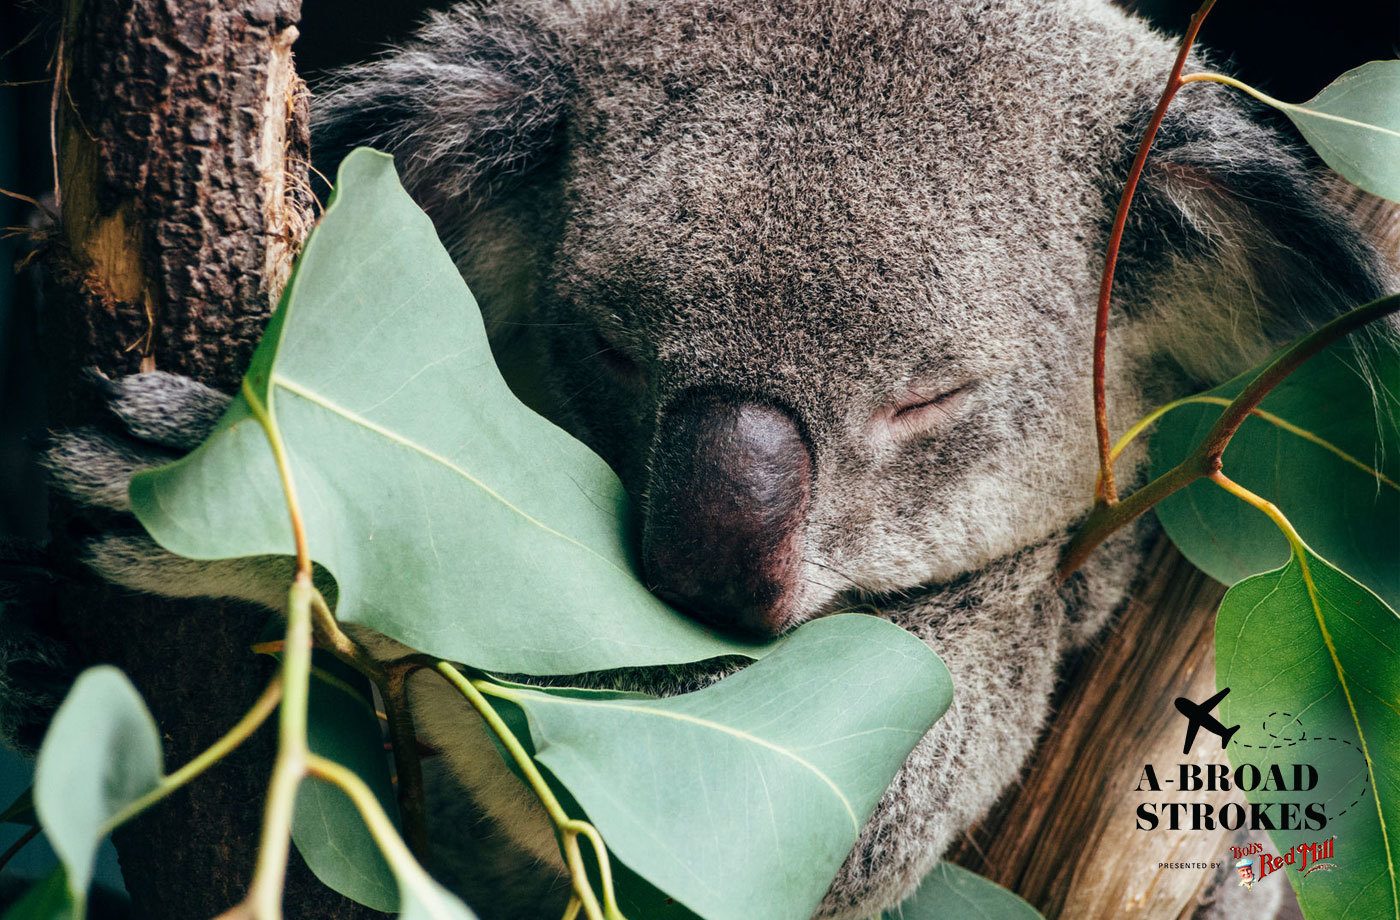 Lone Pine Koala Sanctuary gave me cathartic tears of joy